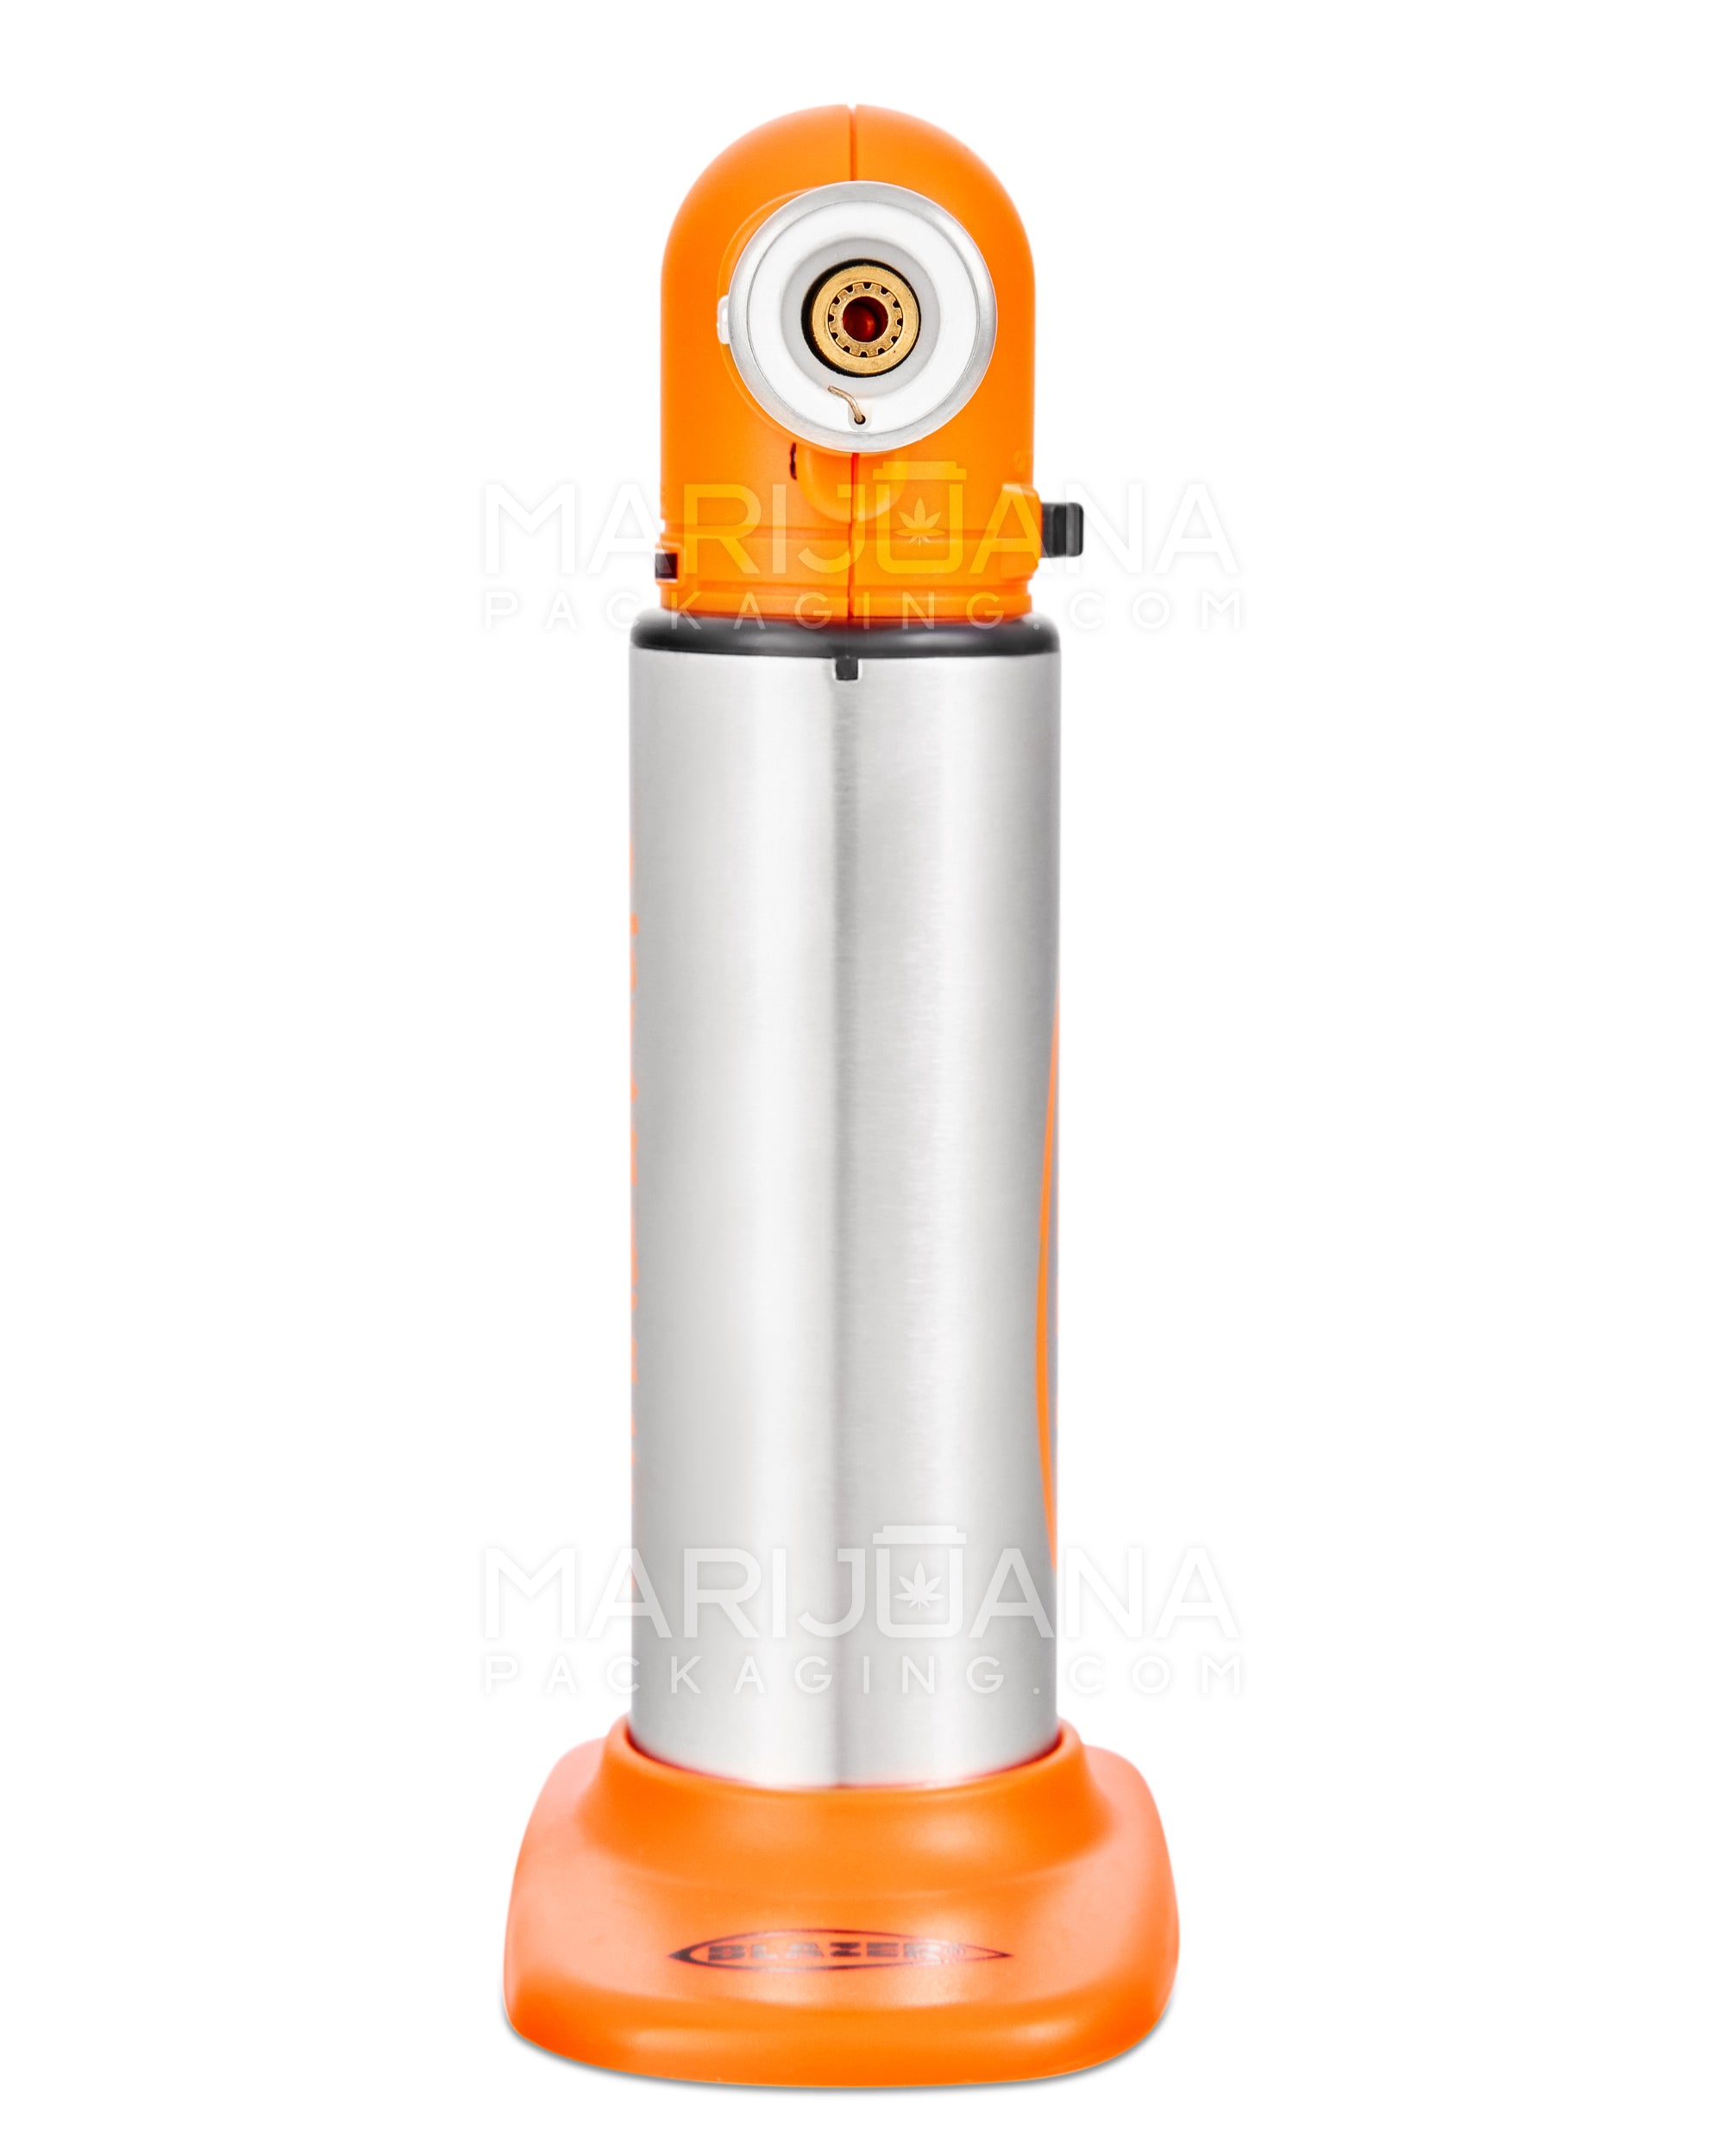 BLAZER | Big Buddy Metal Torch w/ Safety Lock | 7in Tall - No Butane - Orange - 4